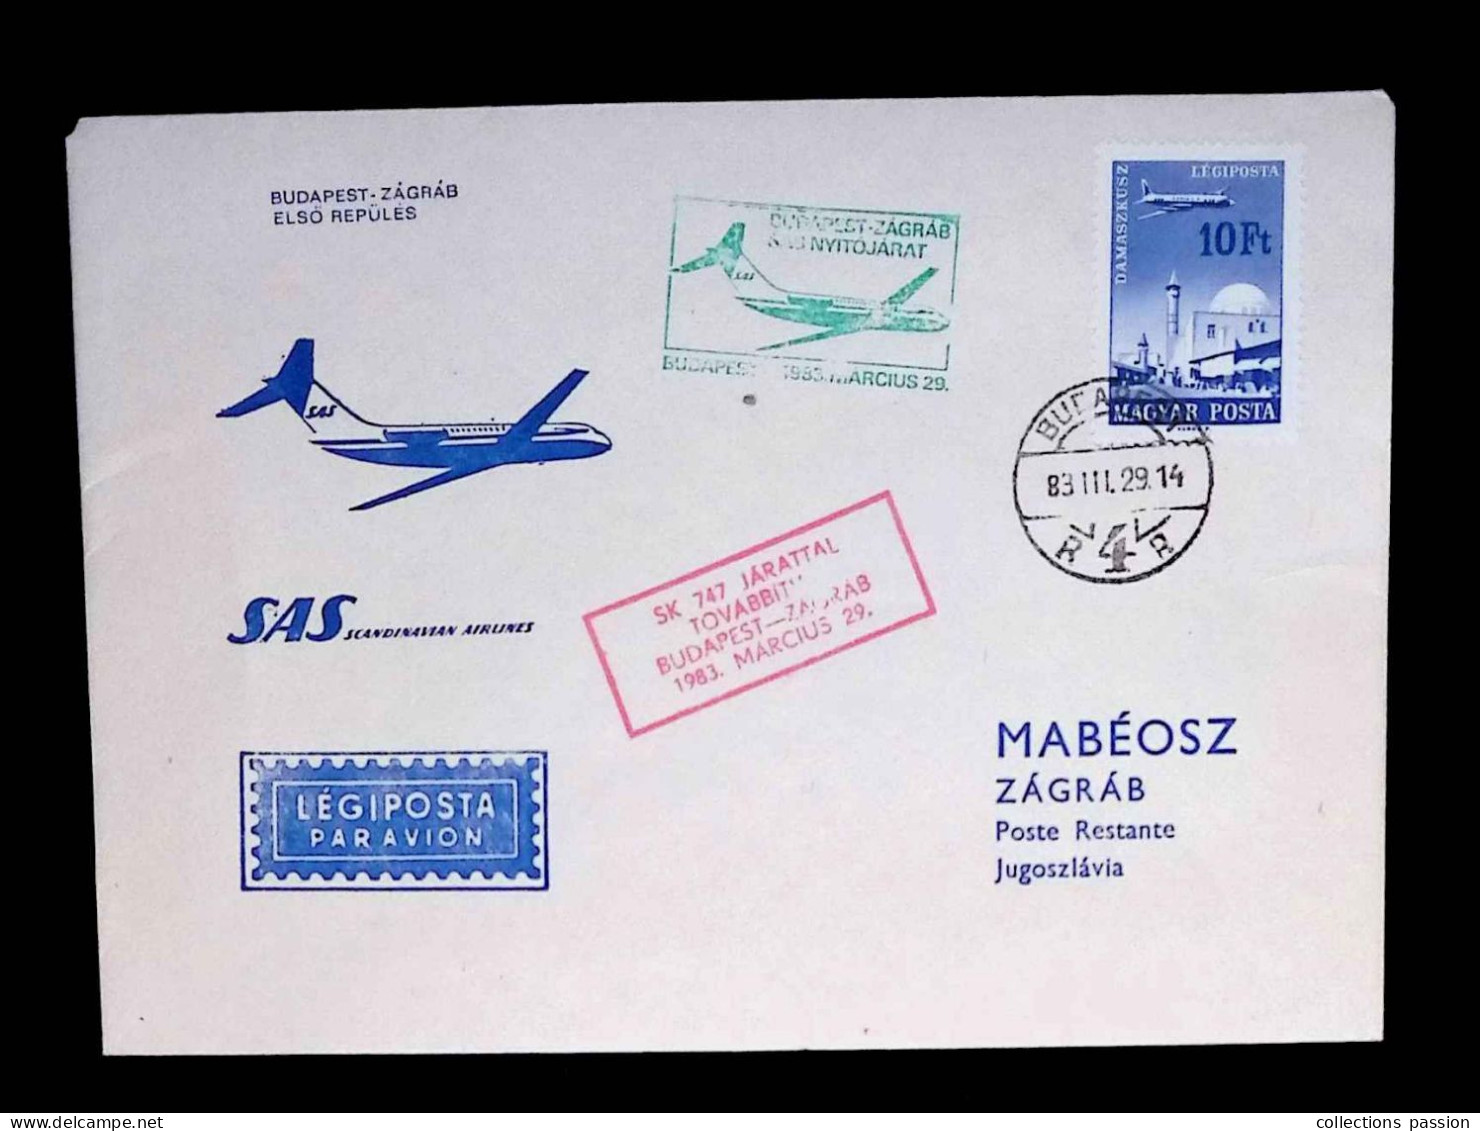 CL, Lettre, Hongrie, Budapest, R 4 R, 1983, SAS Scandinave Airlines, Zagreb, 2 Scans - Marcophilie